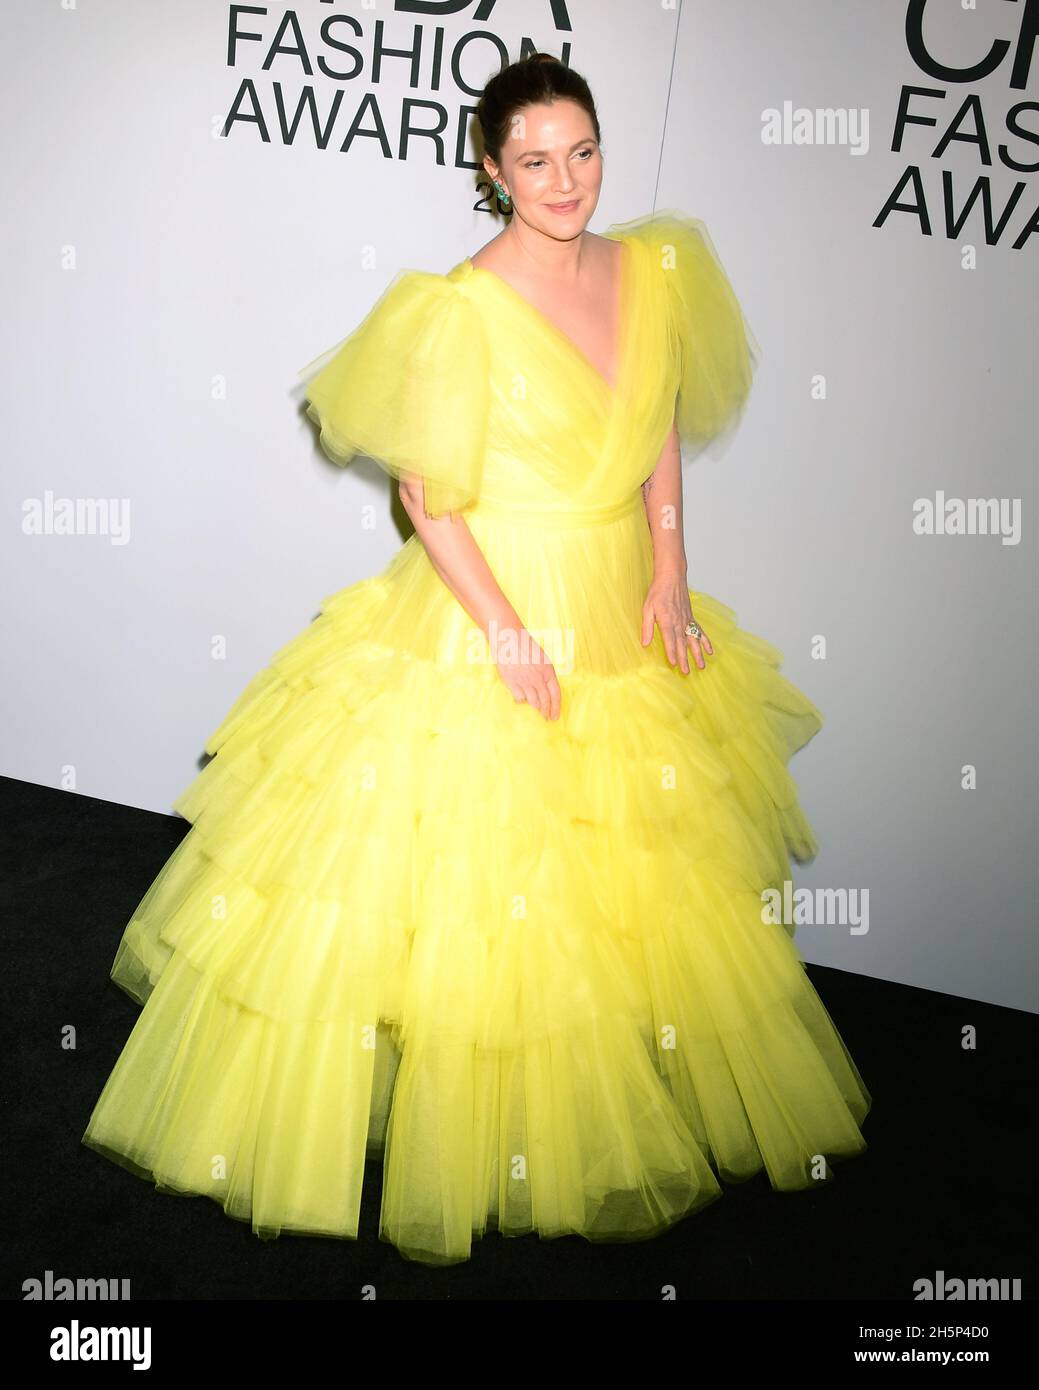 Drew Barrymore arriving for the 2021 CFDA Fashion Awards Credit: Jennifer Graylock/Alamy Live News Stock Photo